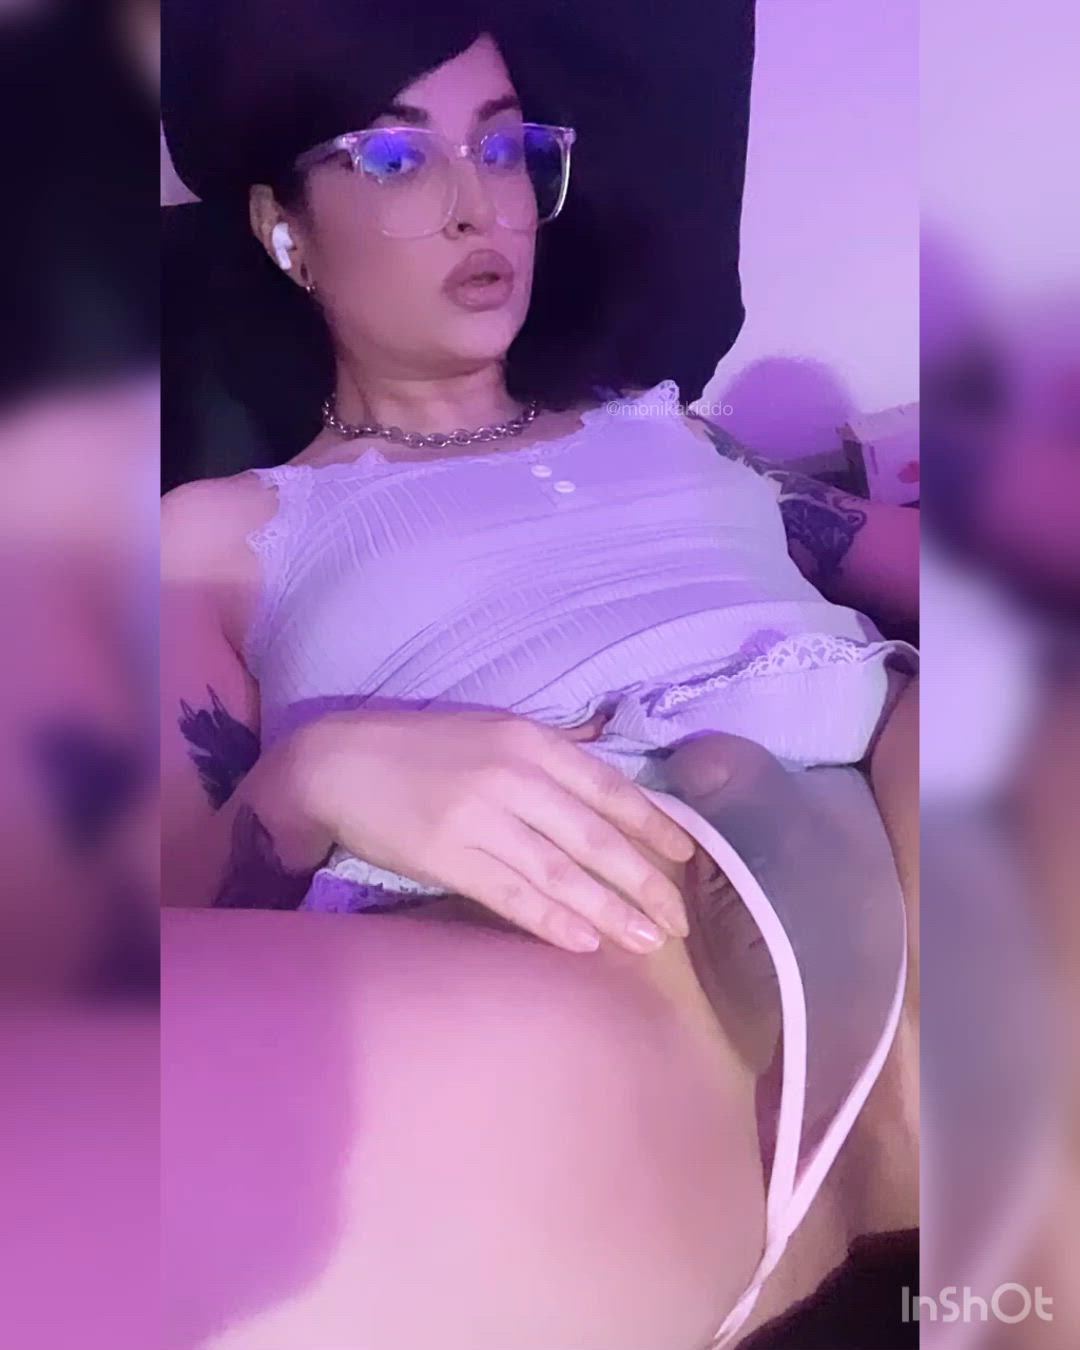 Trans porn video with onlyfans model Monika Kiddo <strong>@monikakiddo</strong>